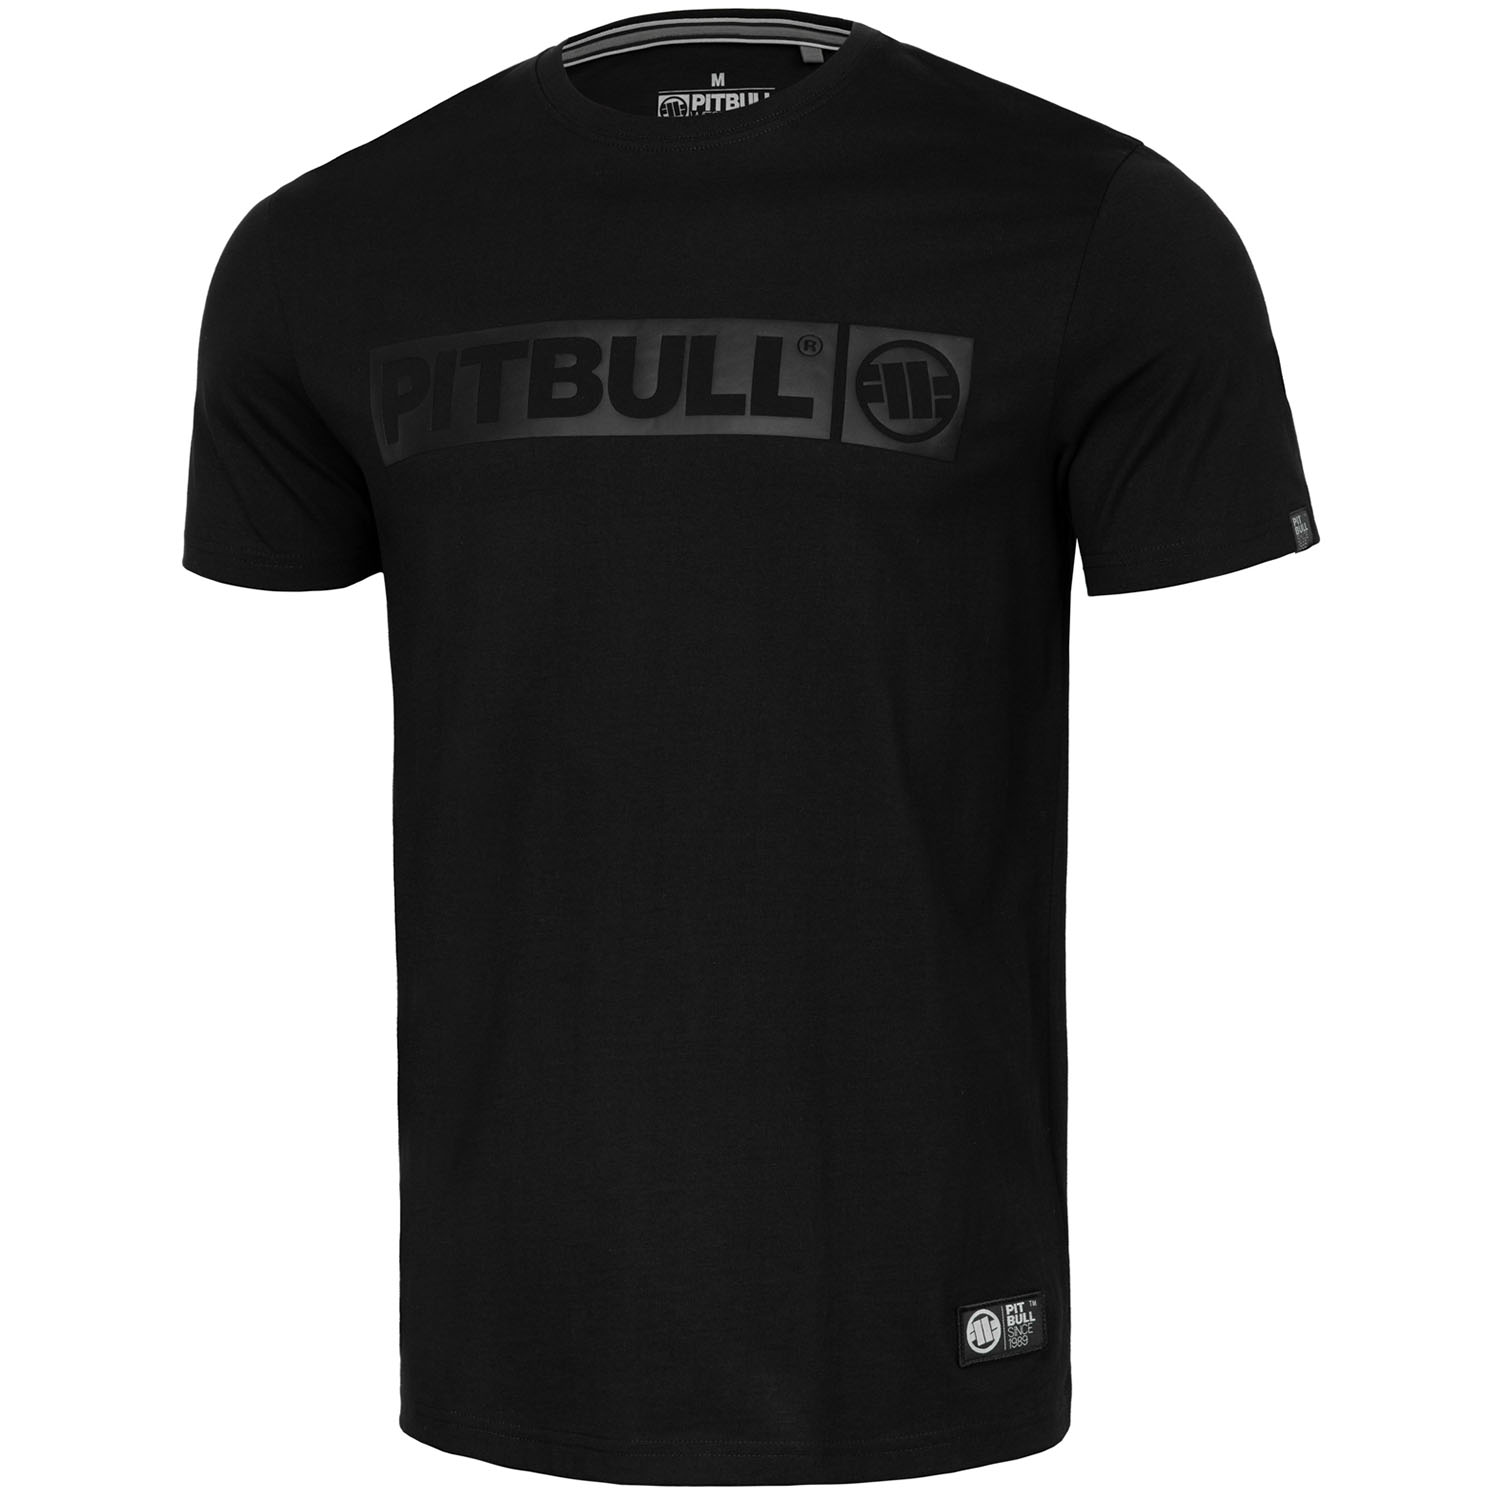 Pit Bull West Coast T-Shirt, Hilltop, black-black